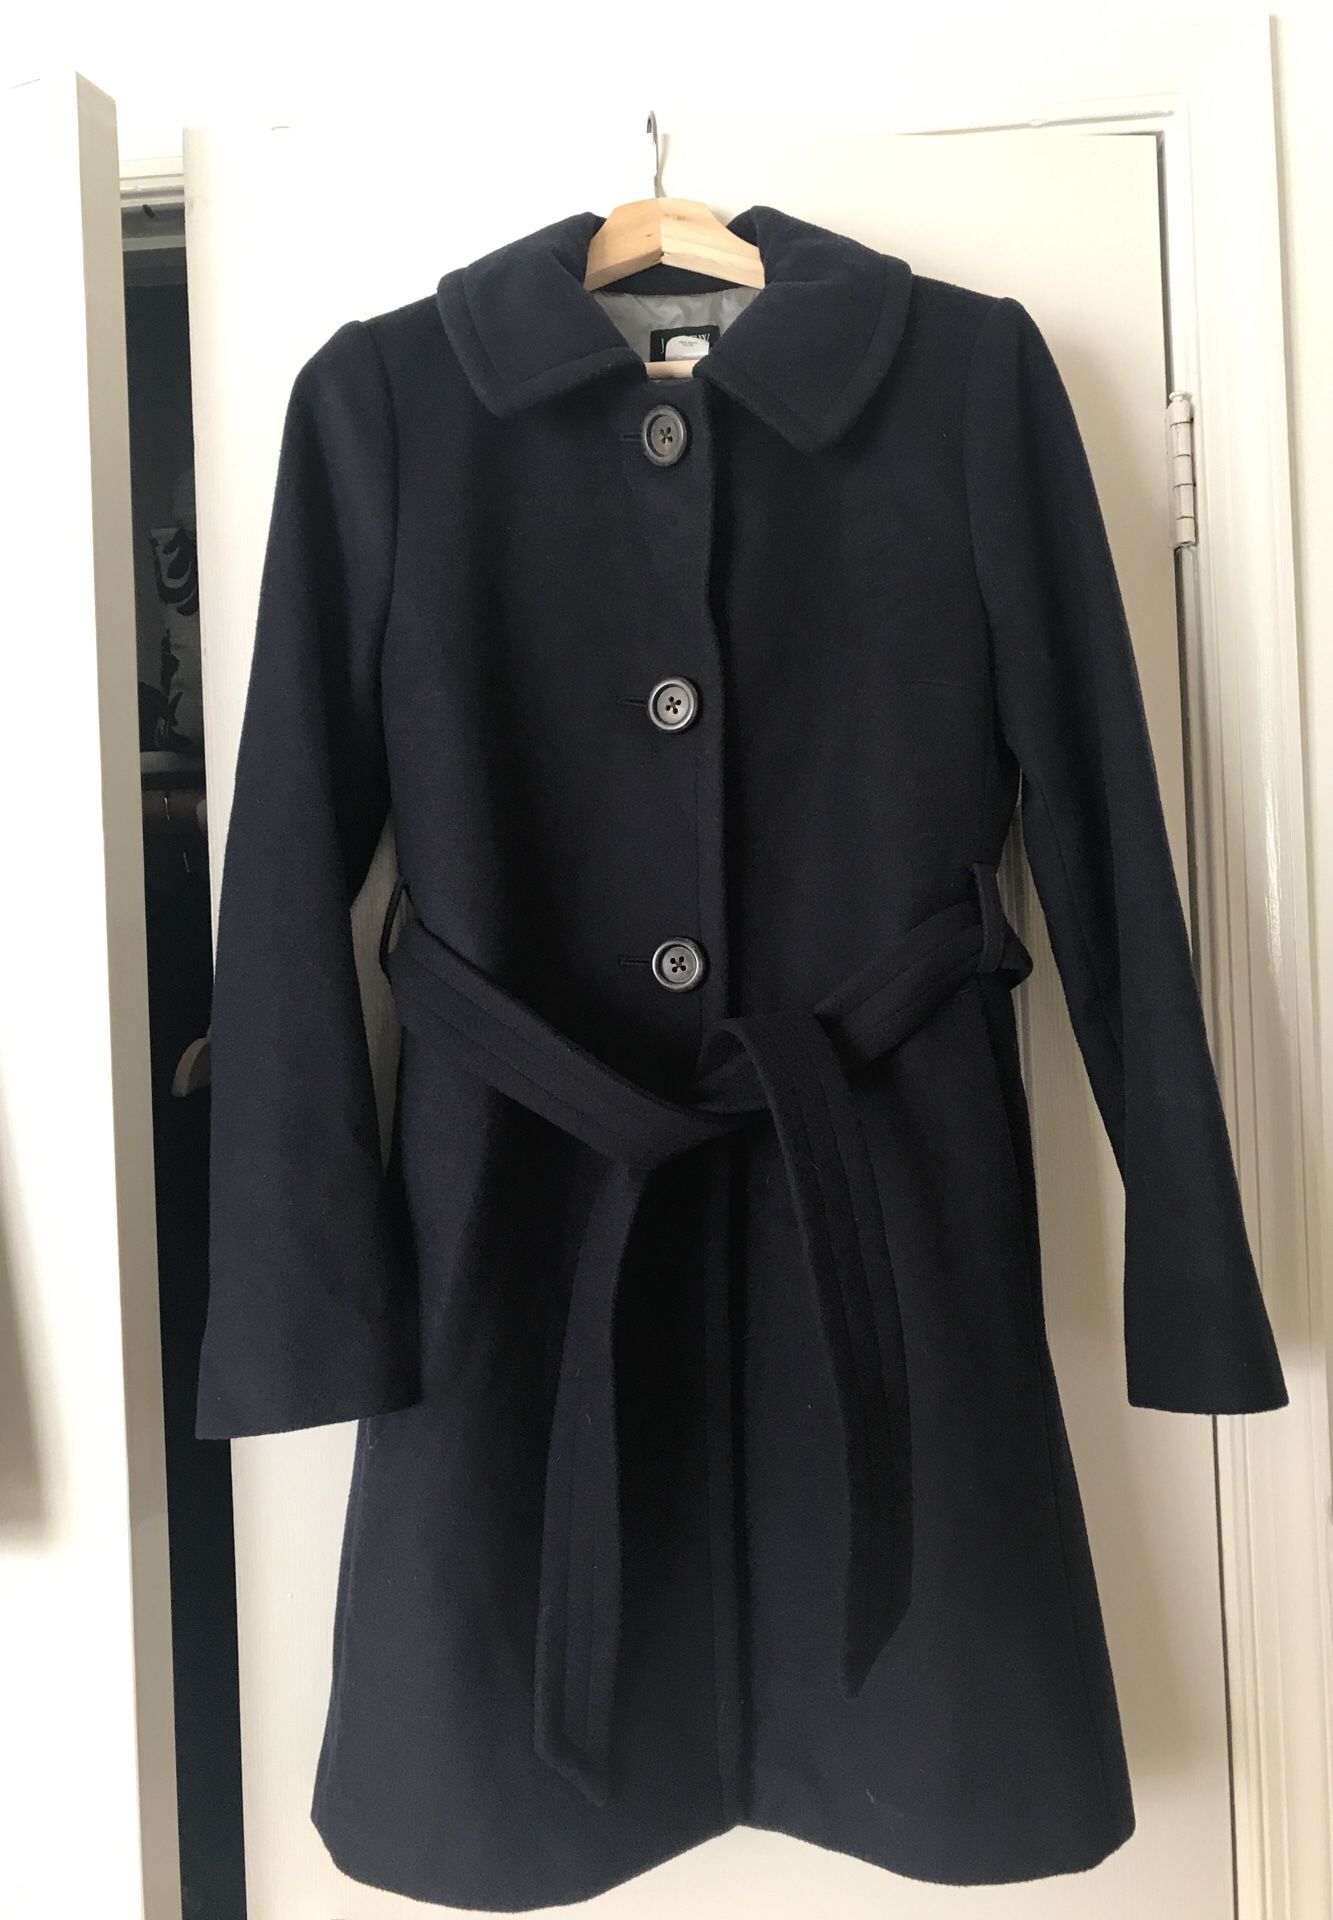 J Crew Wool Women’s Pea Coat, size 6